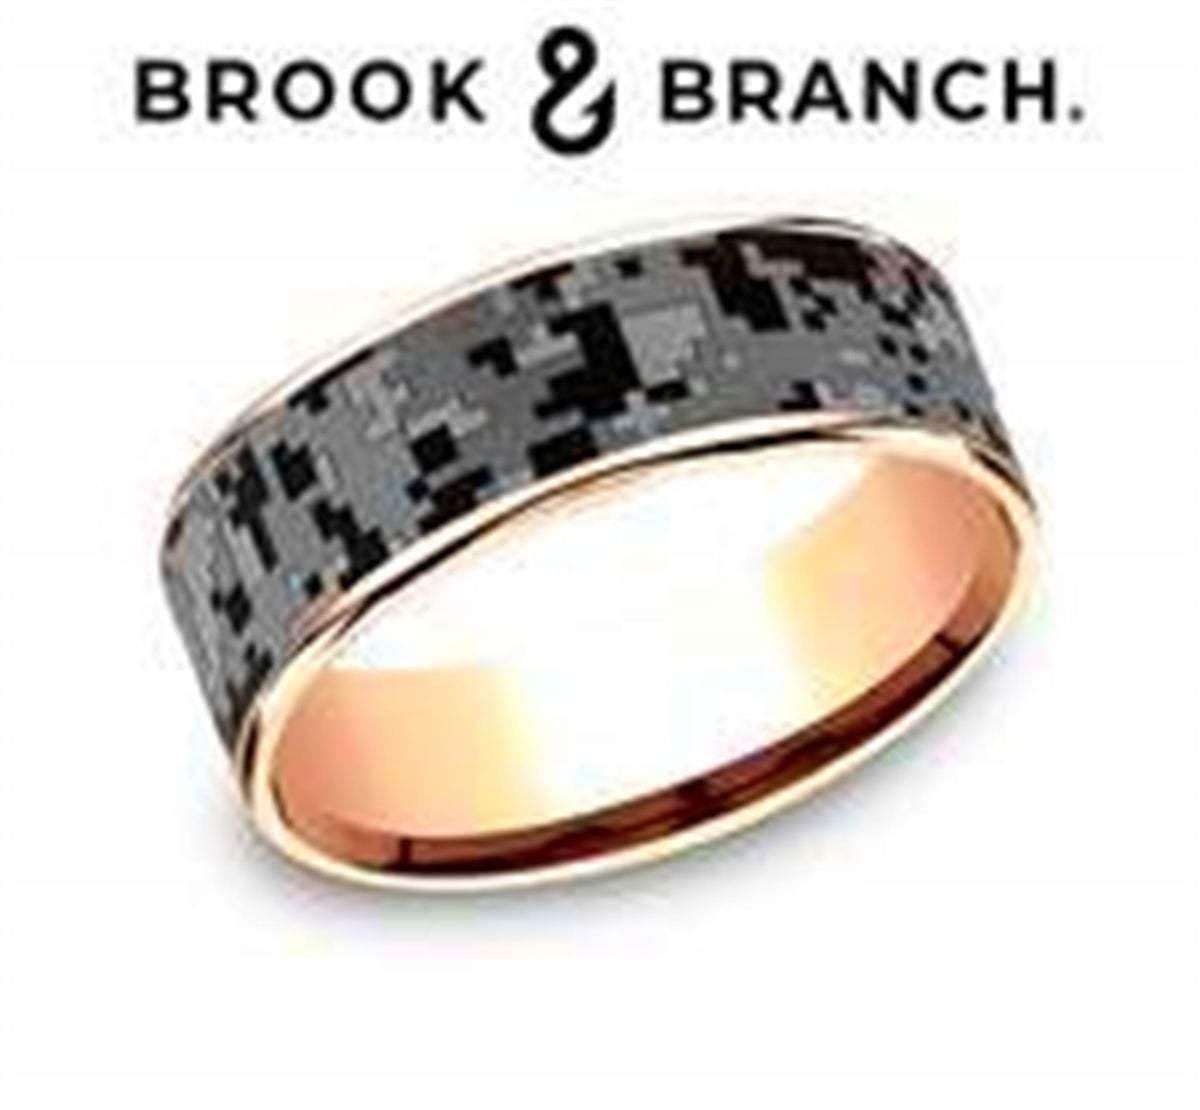 Brook & Branch 14Kt Rose Gold And Tantalum Band